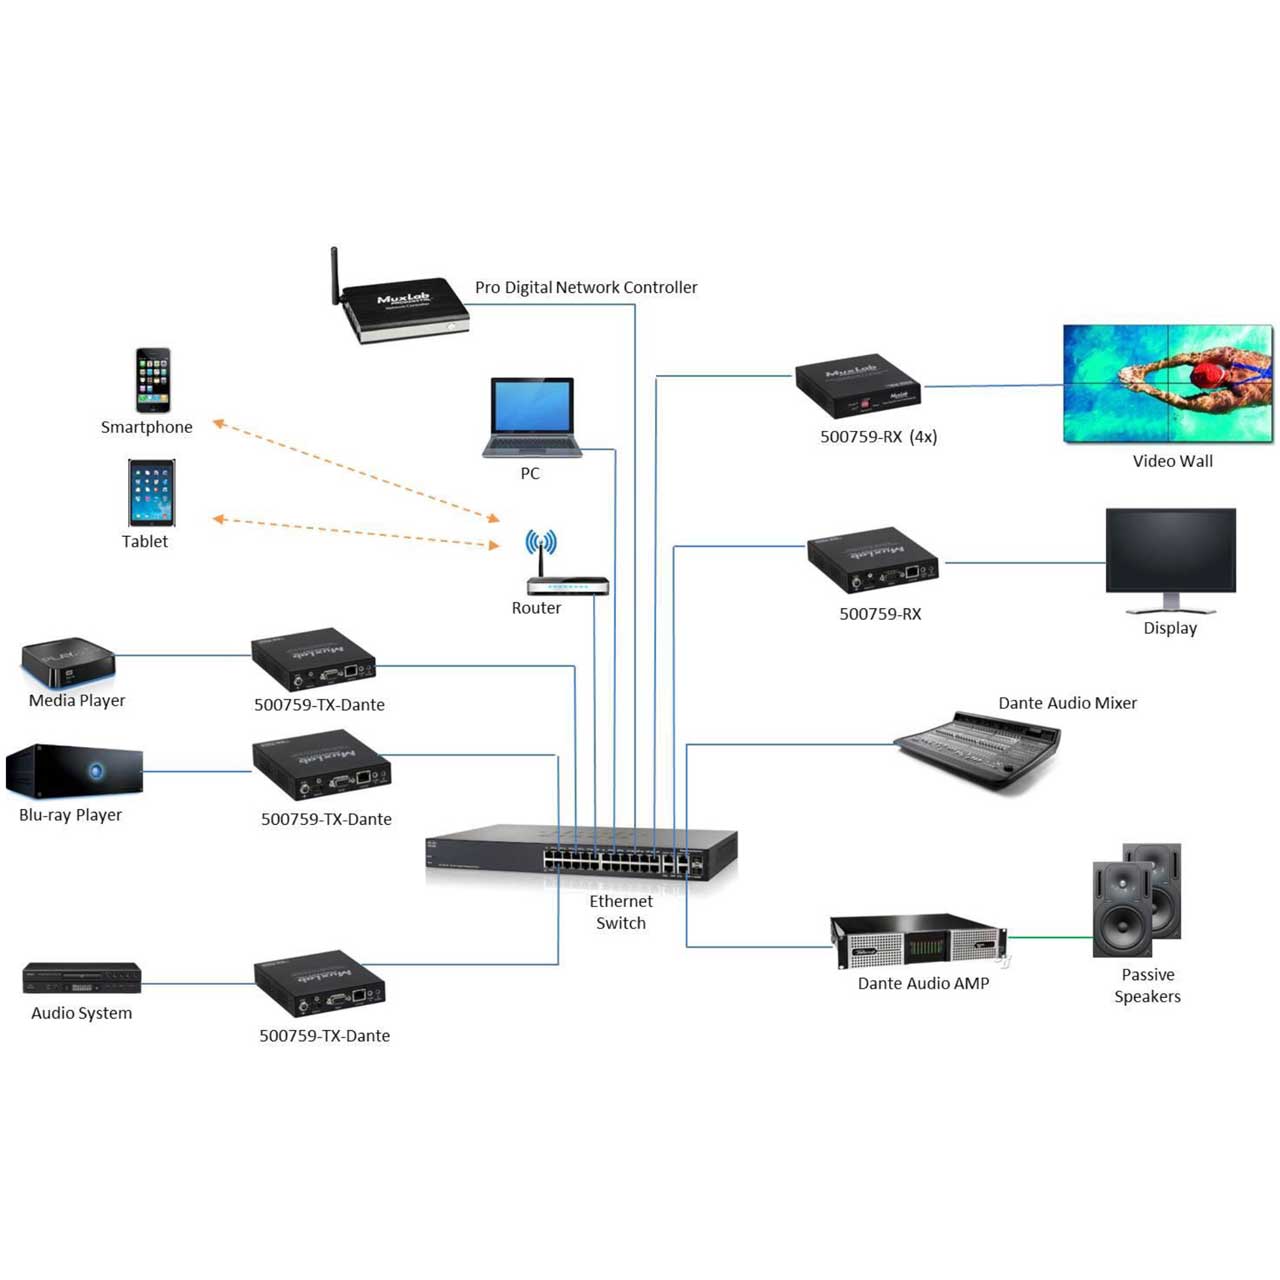 MuxLab 500759-TX-Dante HDMI/Dante Over IP PoE Transmitter UHD-4K